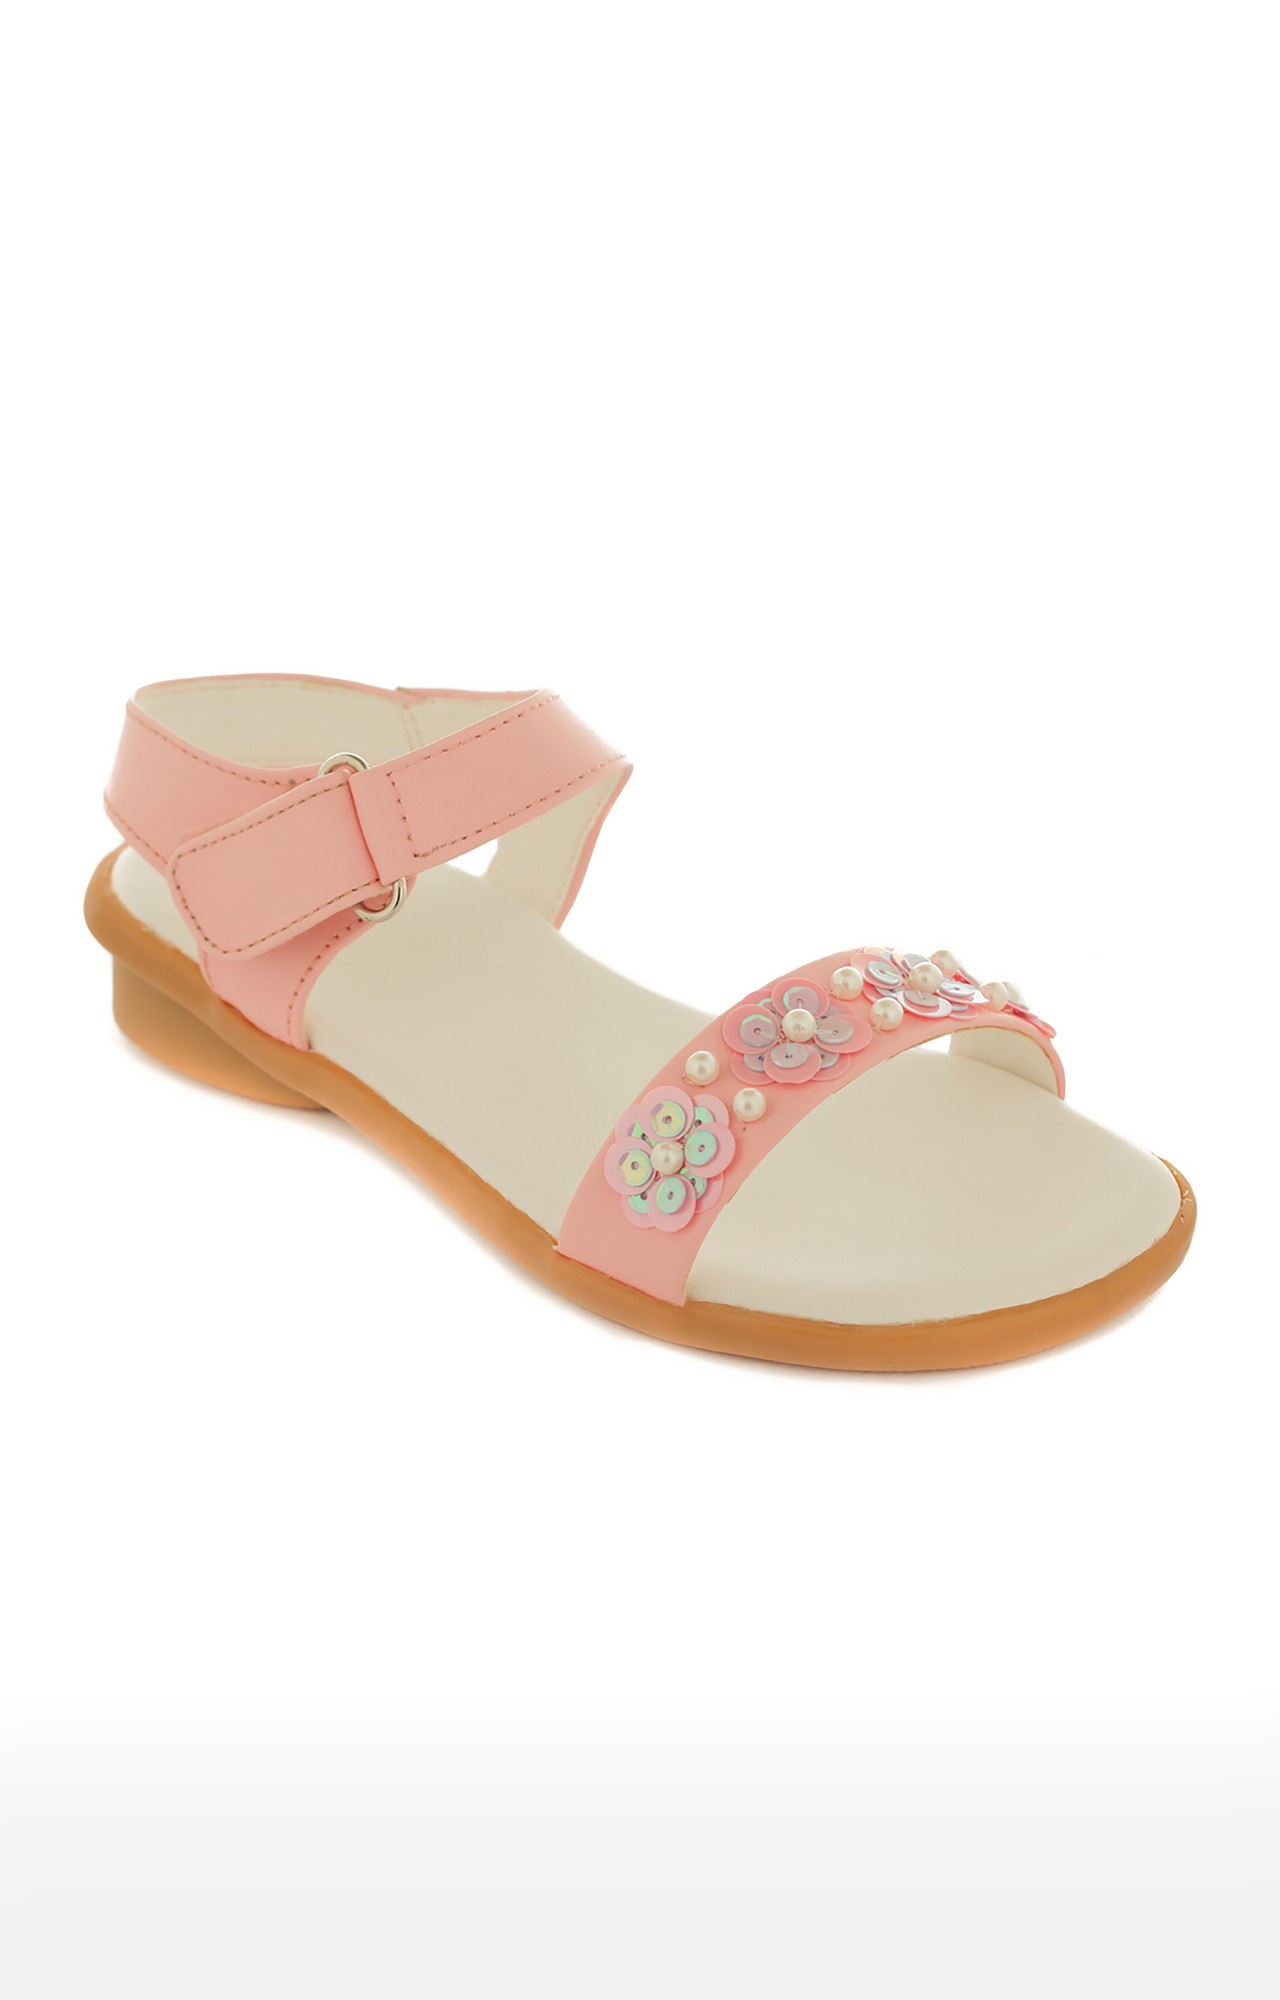 Girls Pink Velcro Sandals